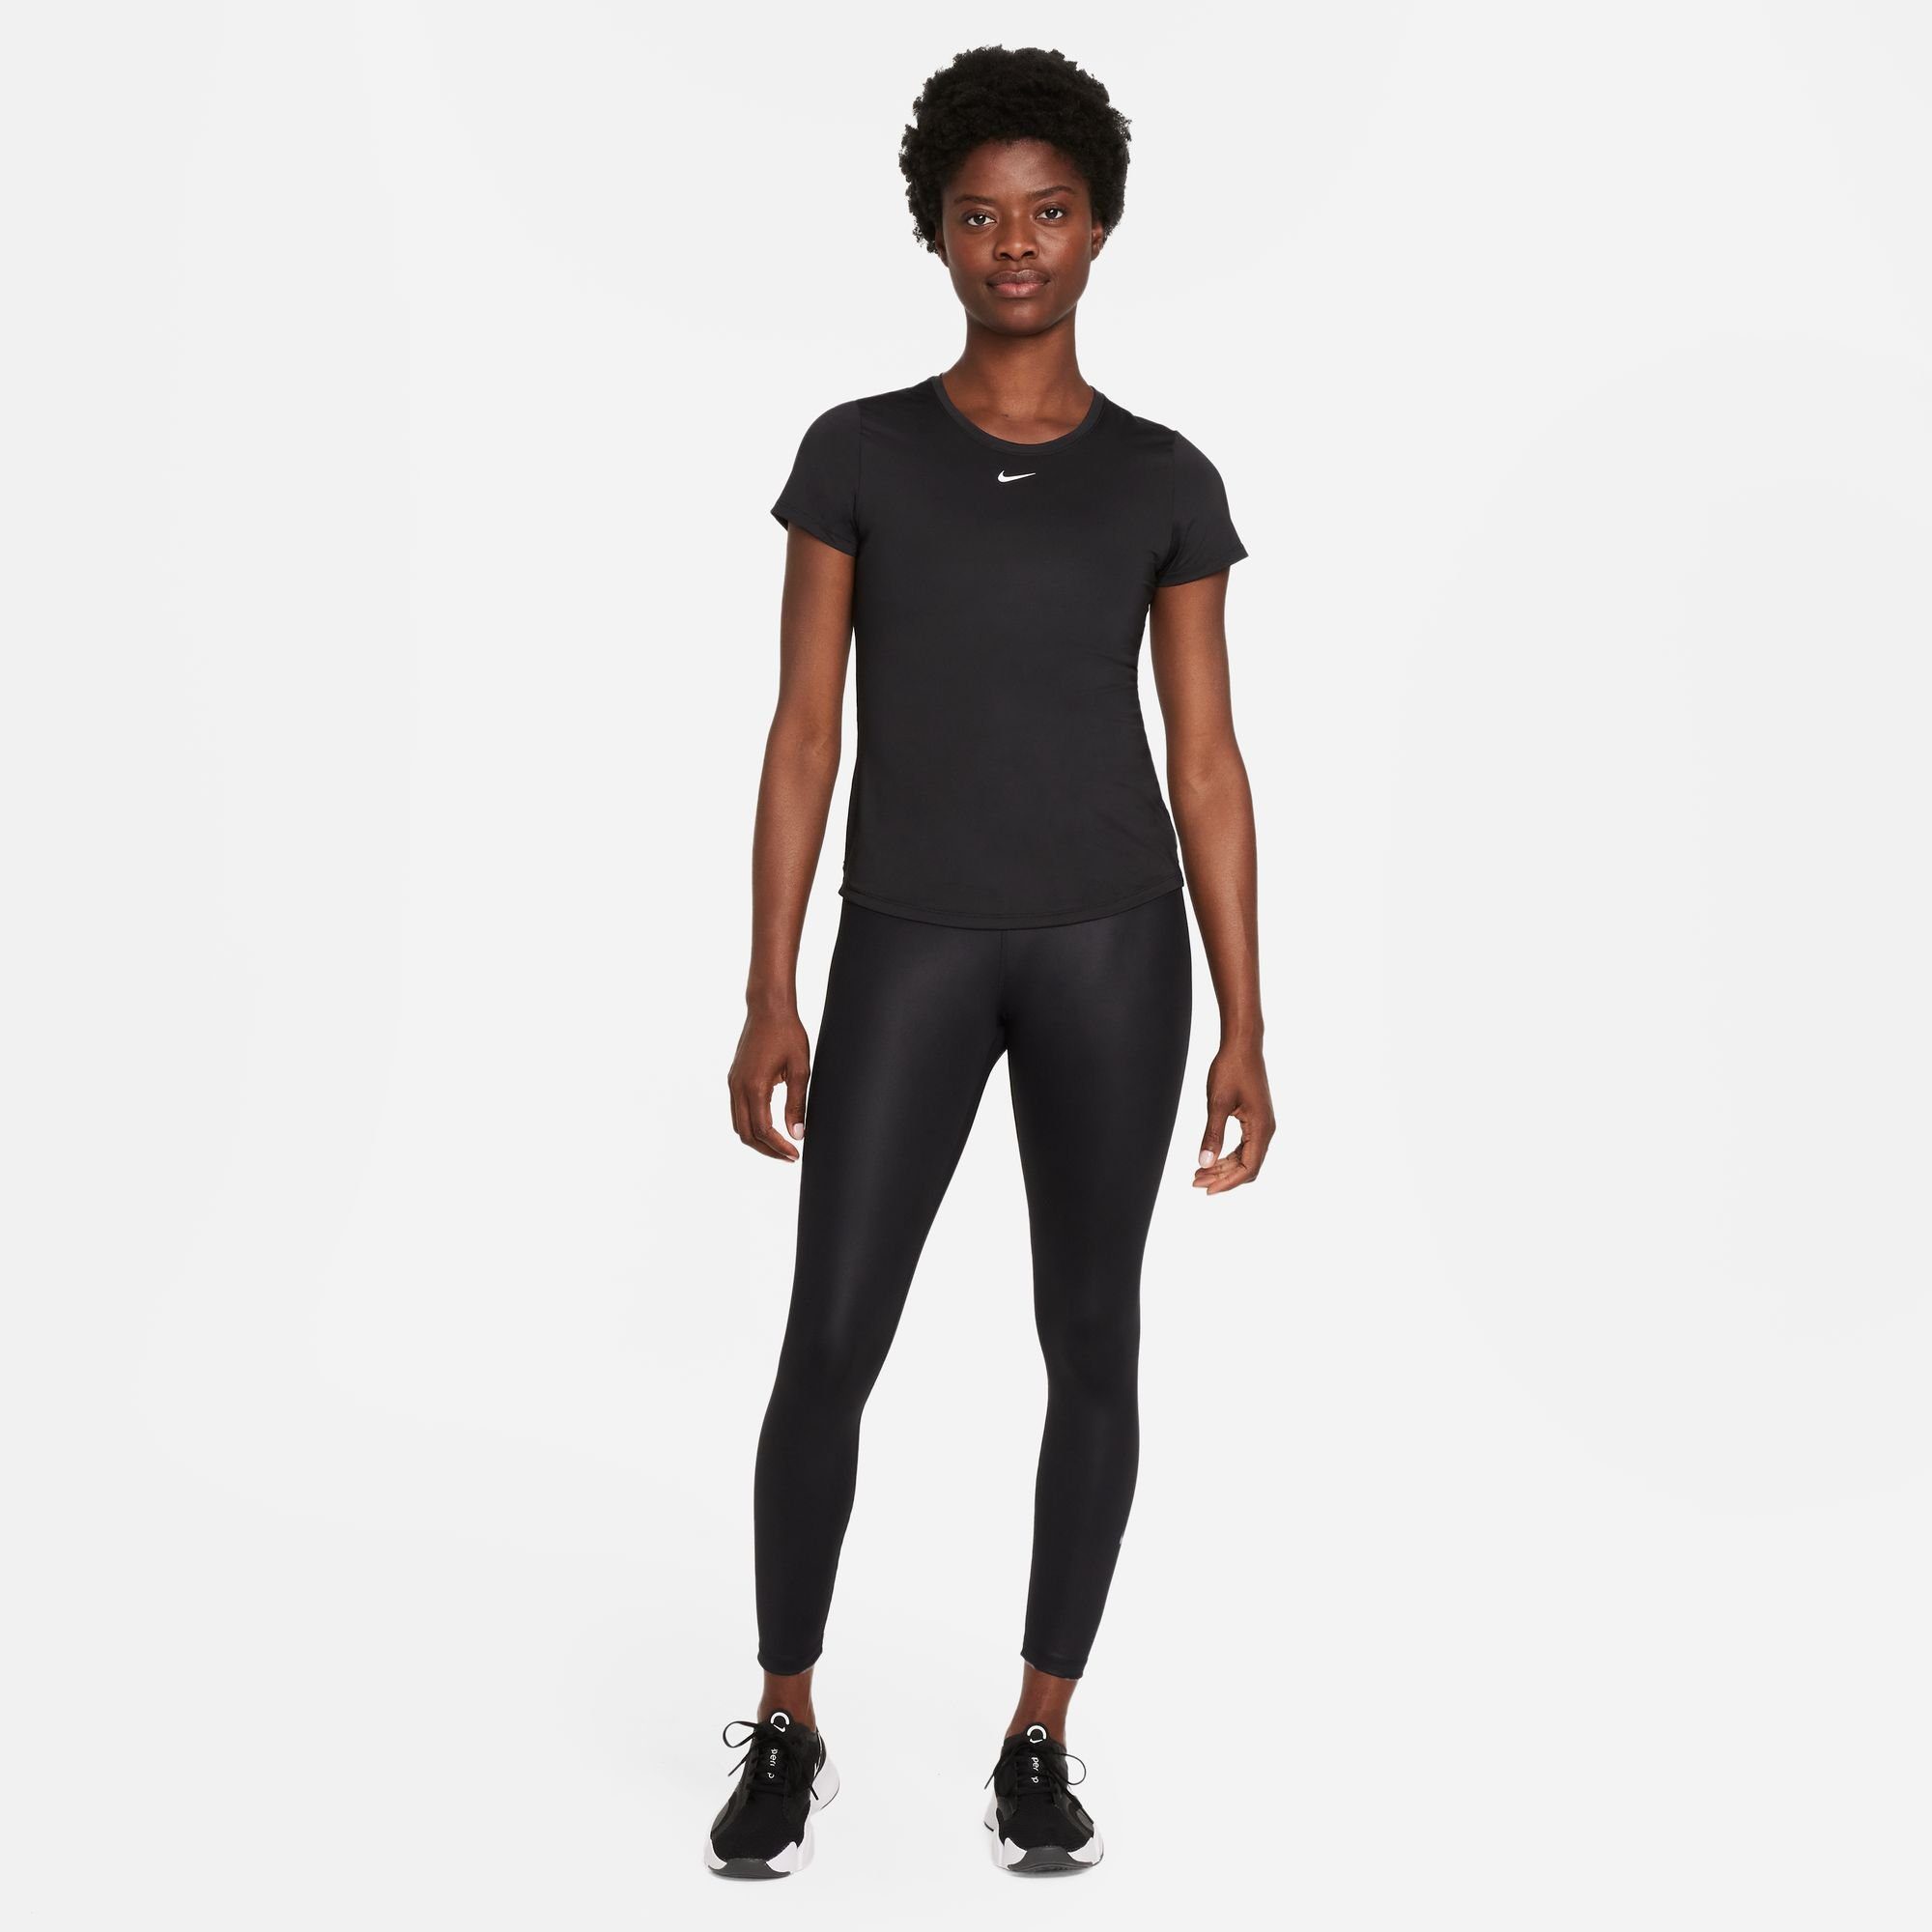 SHORT-SLEEVE schwarz WOMEN'S Nike SLIM TOP DRI-FIT ONE Trainingsshirt FIT